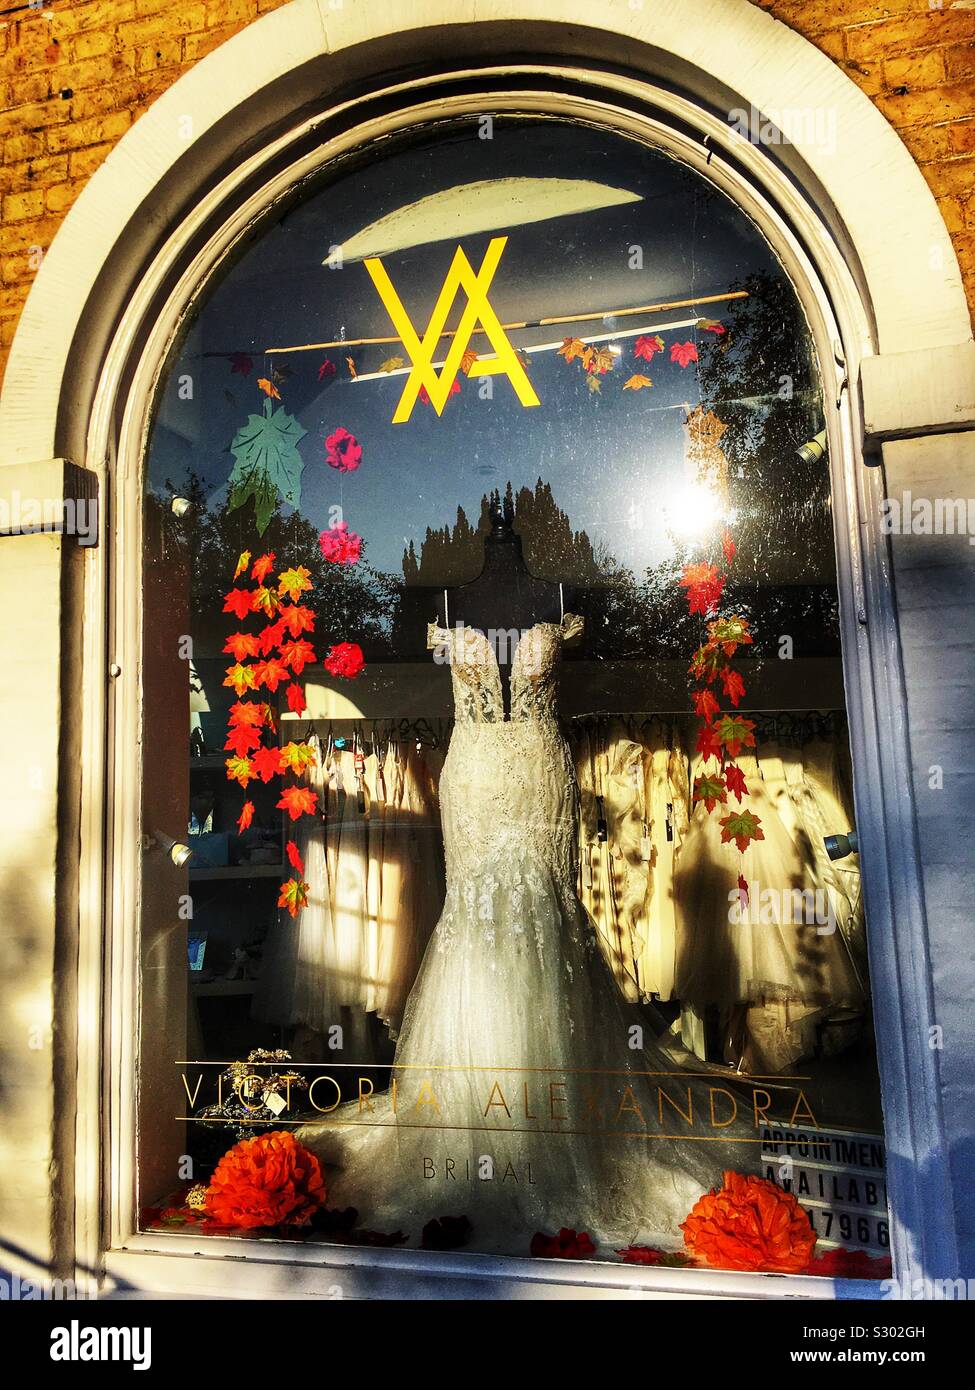 Victoria Alexander bridal wear shop Stock Photo